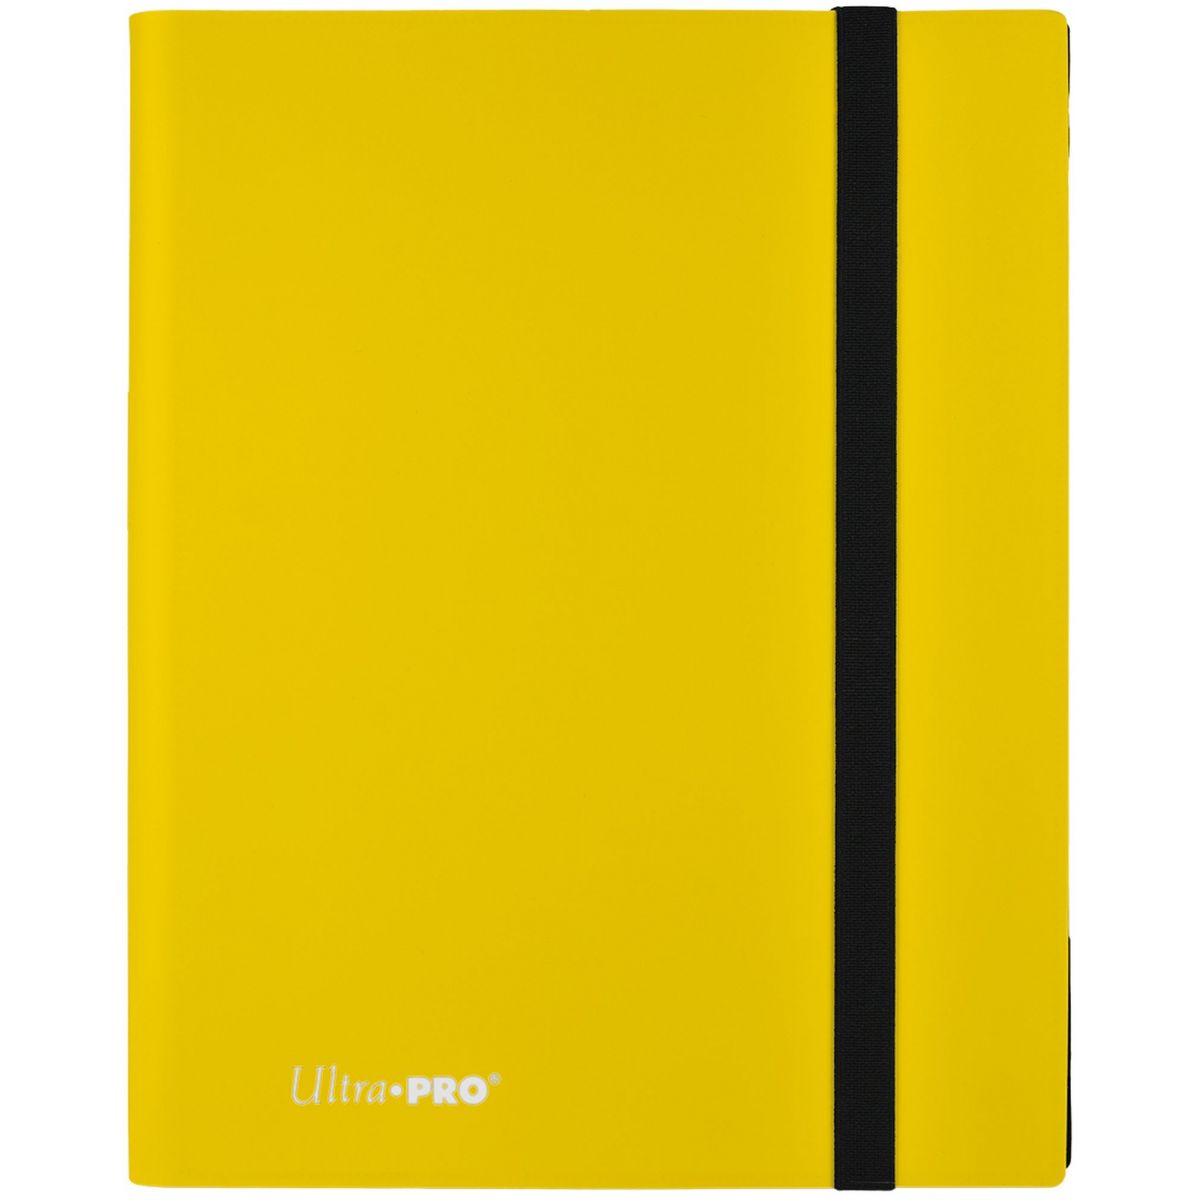 Ultra Pro - Pro Binder - Eclipse - 9 Cases - Jaune / Yellow (360)